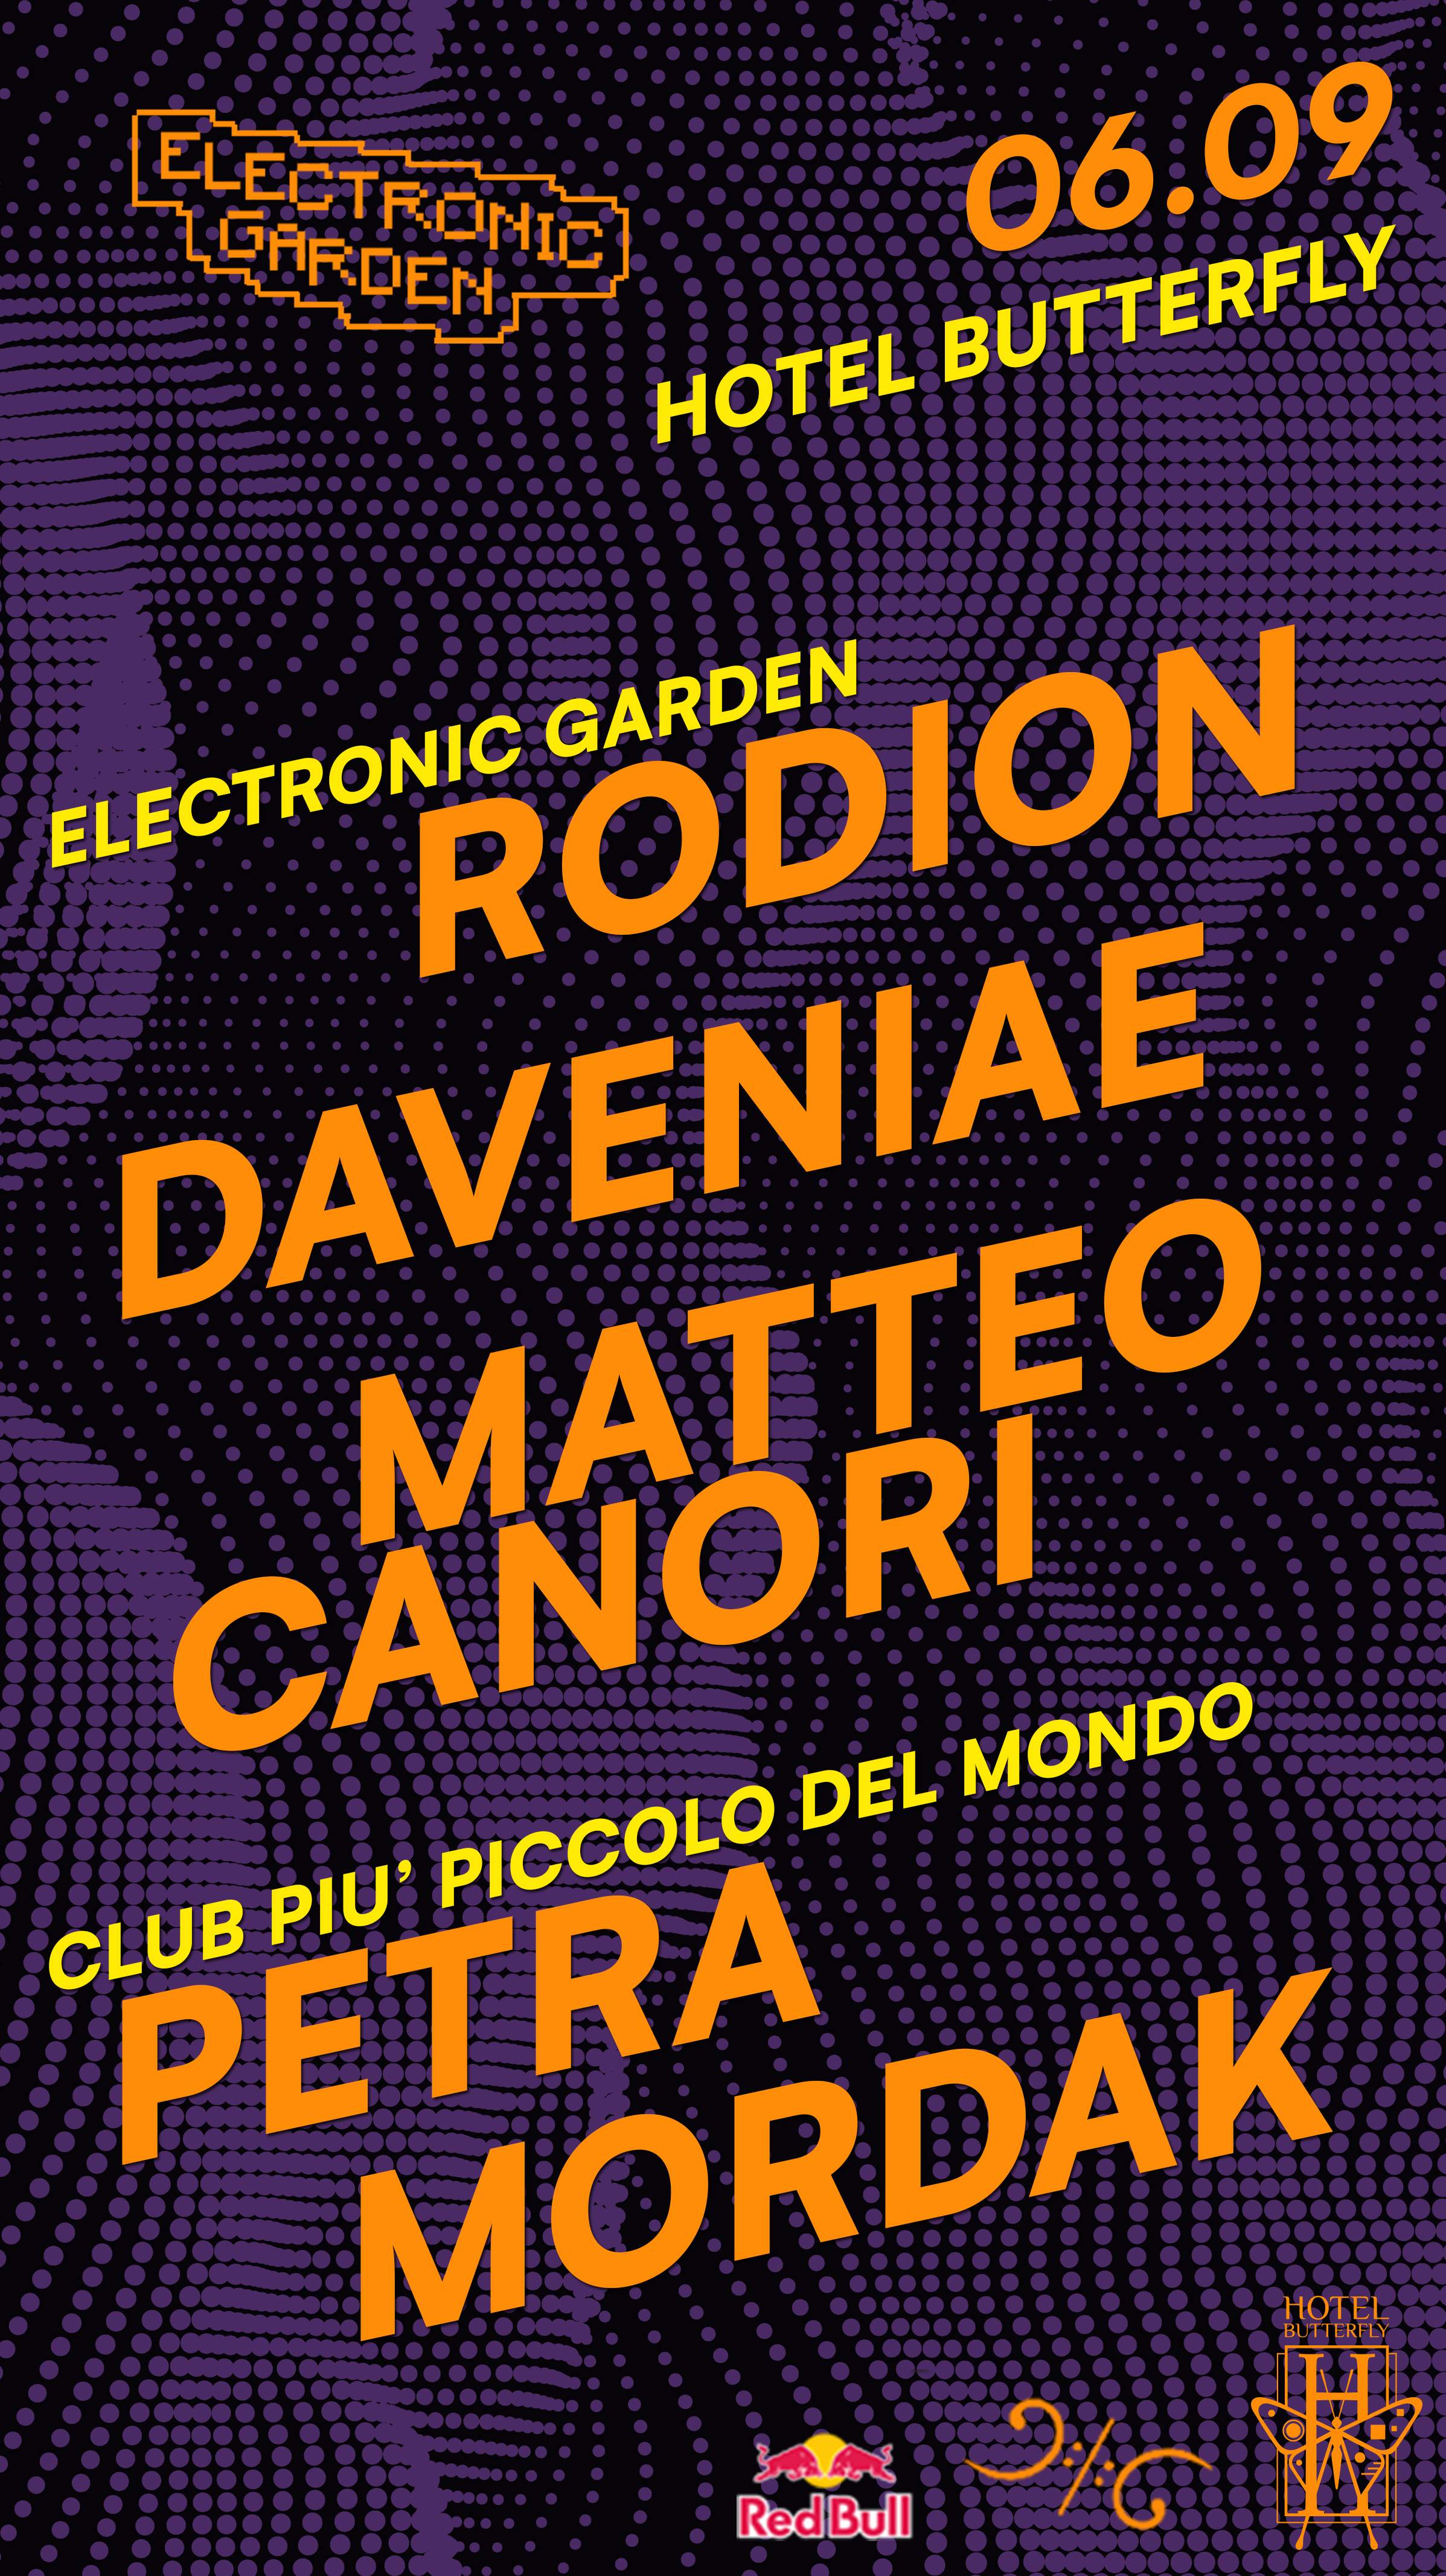 Electronic Garden: Rodion, Daveniae, Matteo Canori, Petra & Mordak - フライヤー表